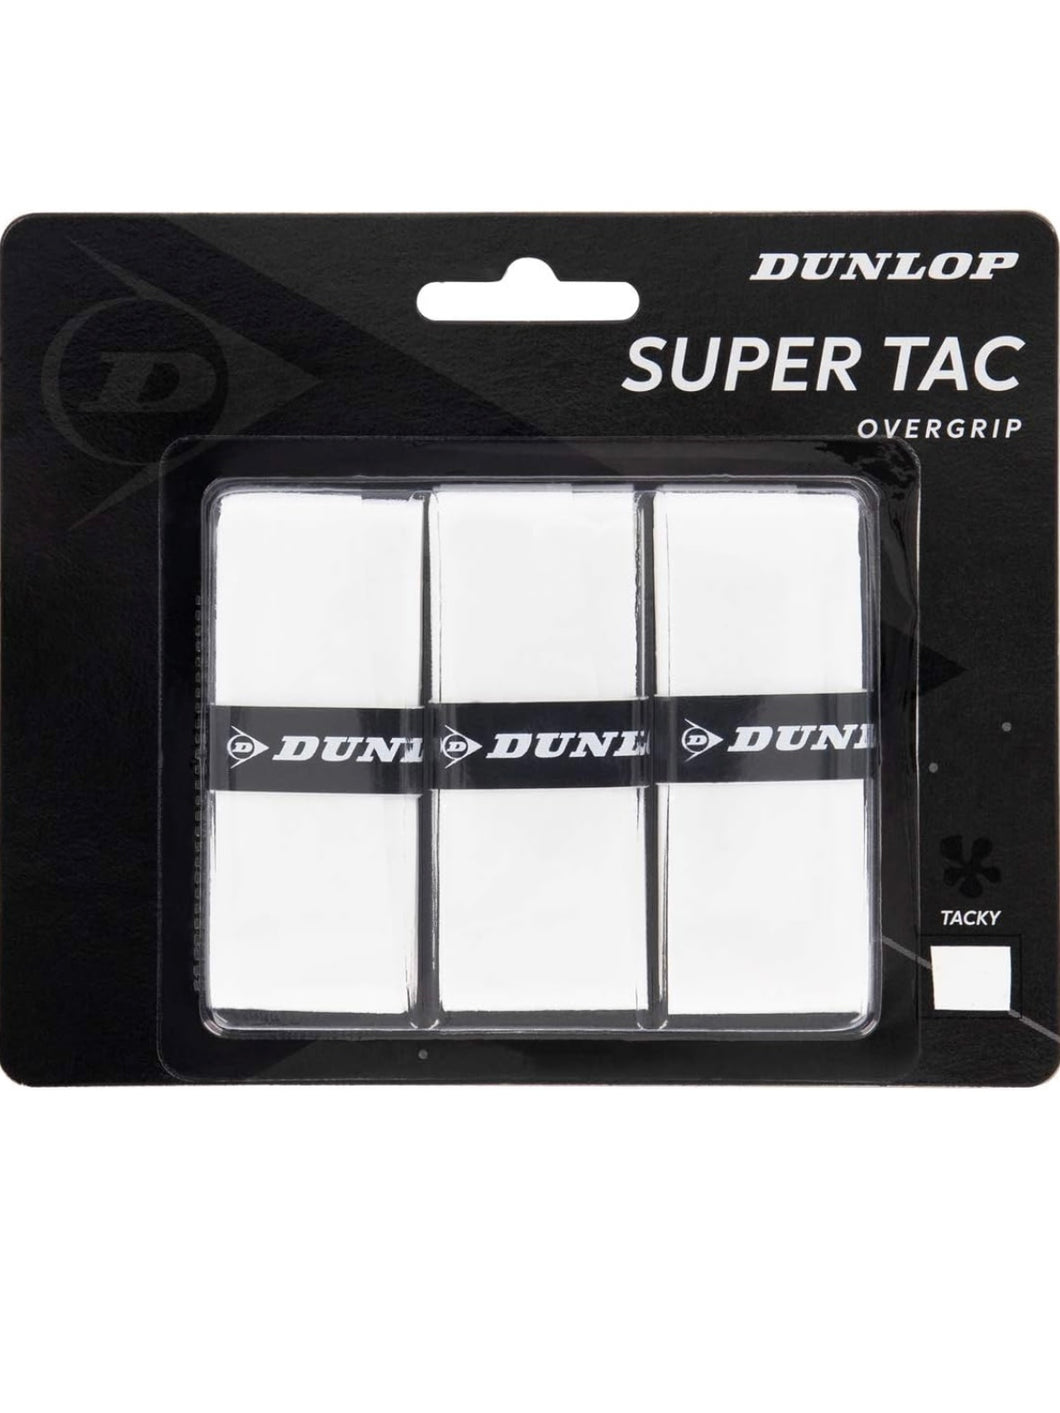 Dunlop Super Tac Overgrip